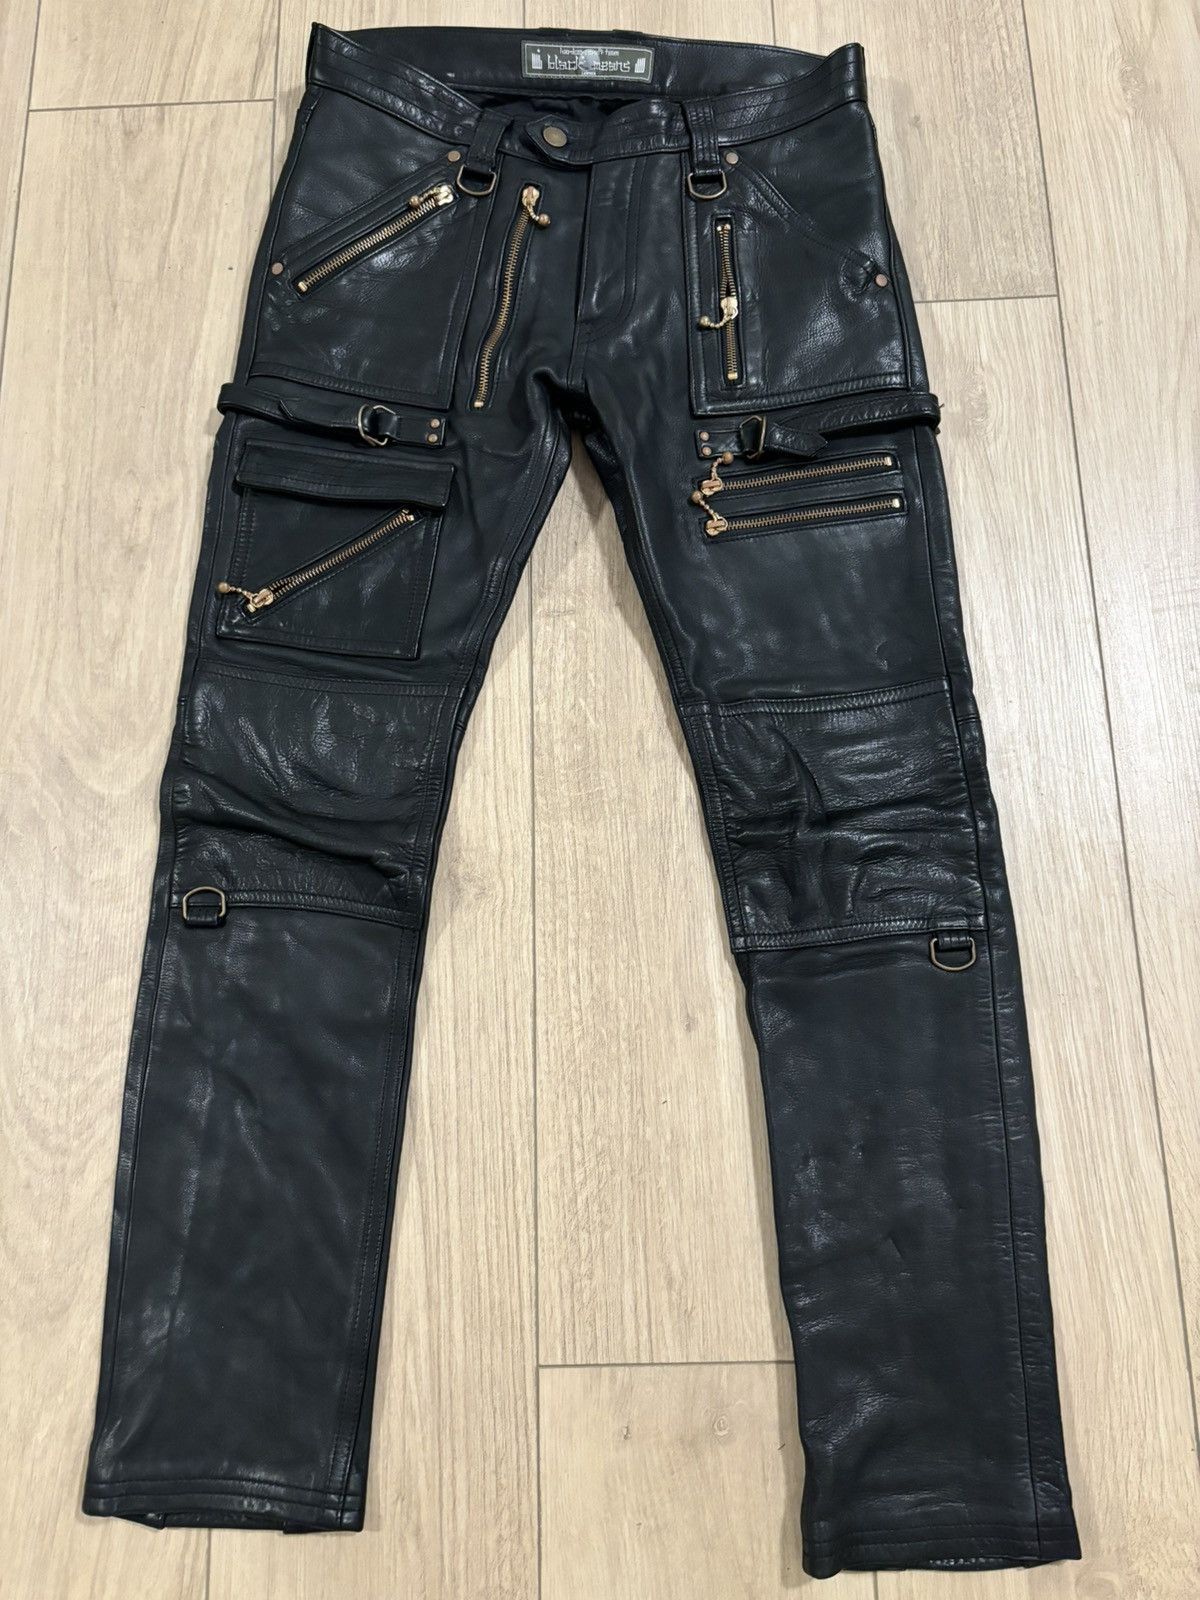 Blackmeans Leather Pants | Grailed